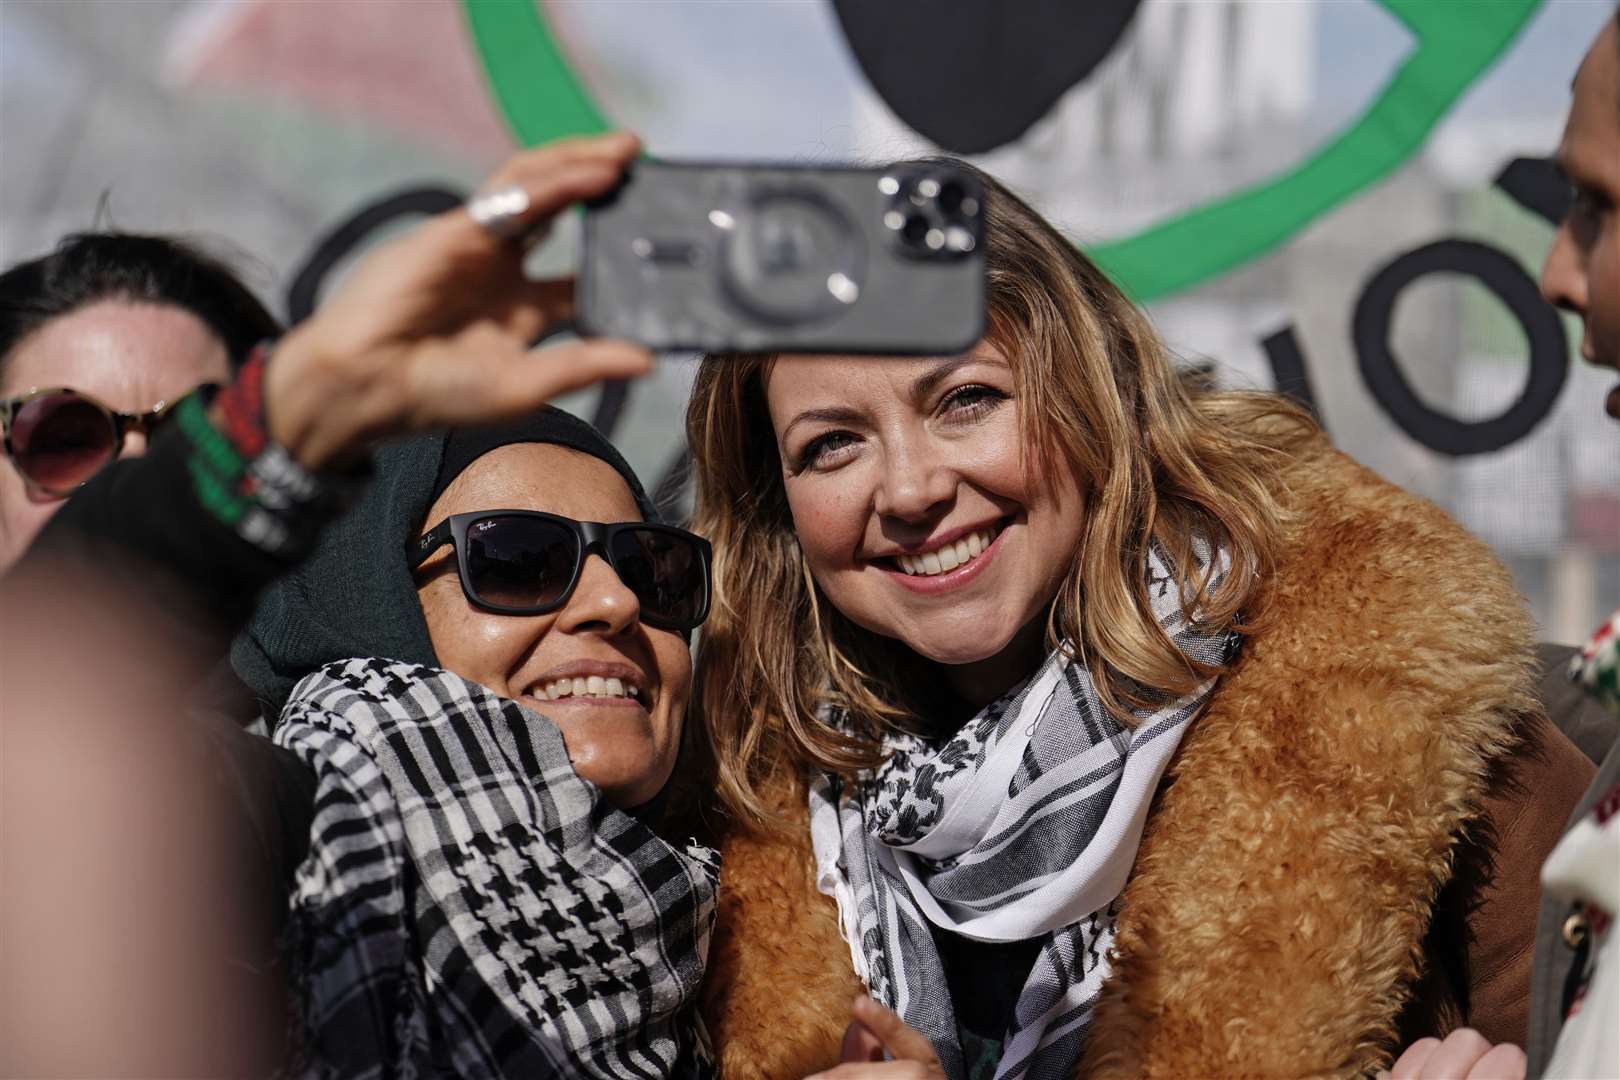 Charlotte Church smiling for a selfie during the march (Jordan Pettitt/PA)